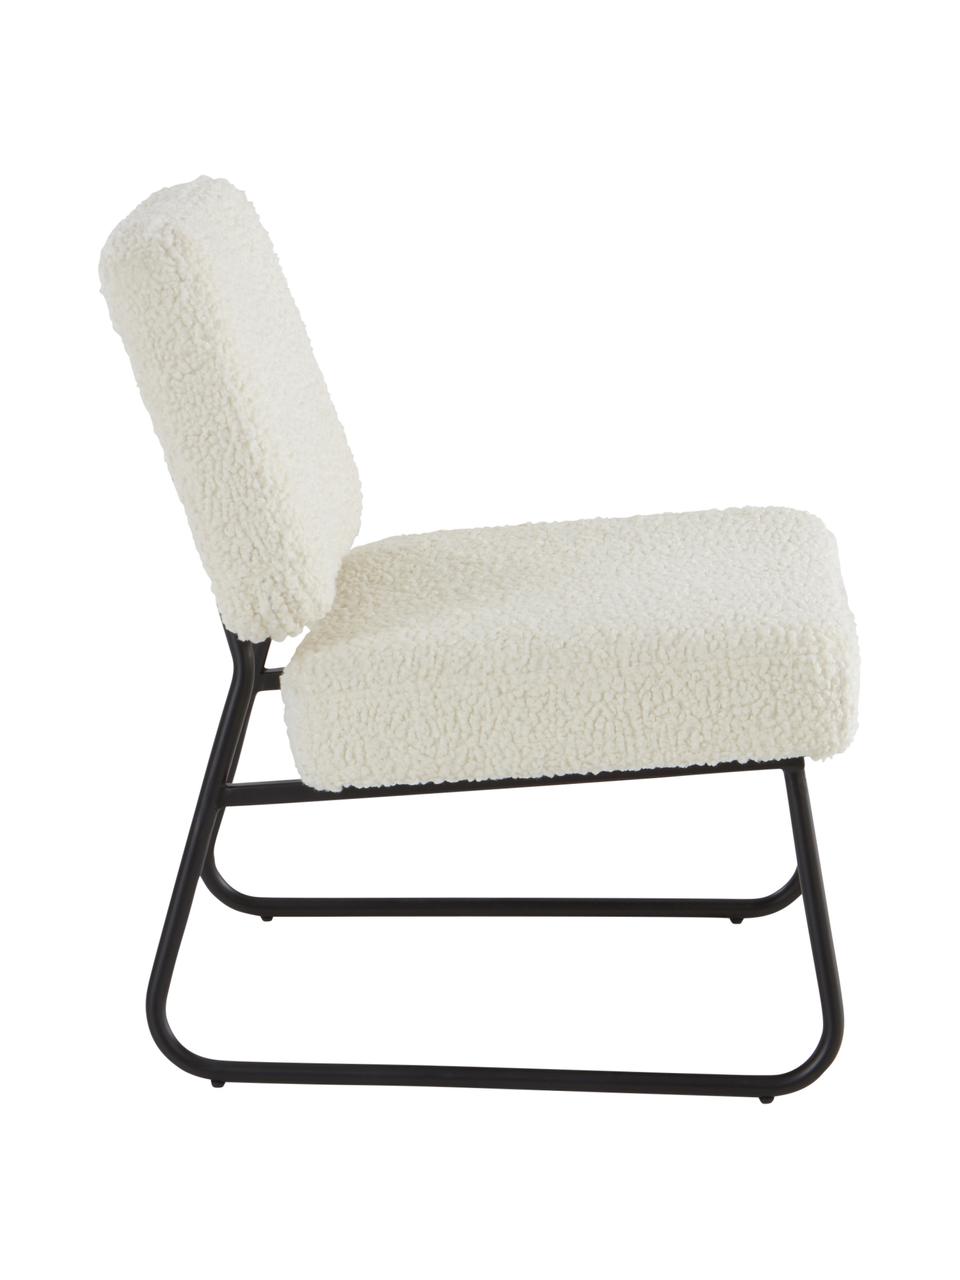 Chaise en peluche pour enfant Bolzano Mini, Tissu peluche blanc, larg. 52 x prof. 46 cm